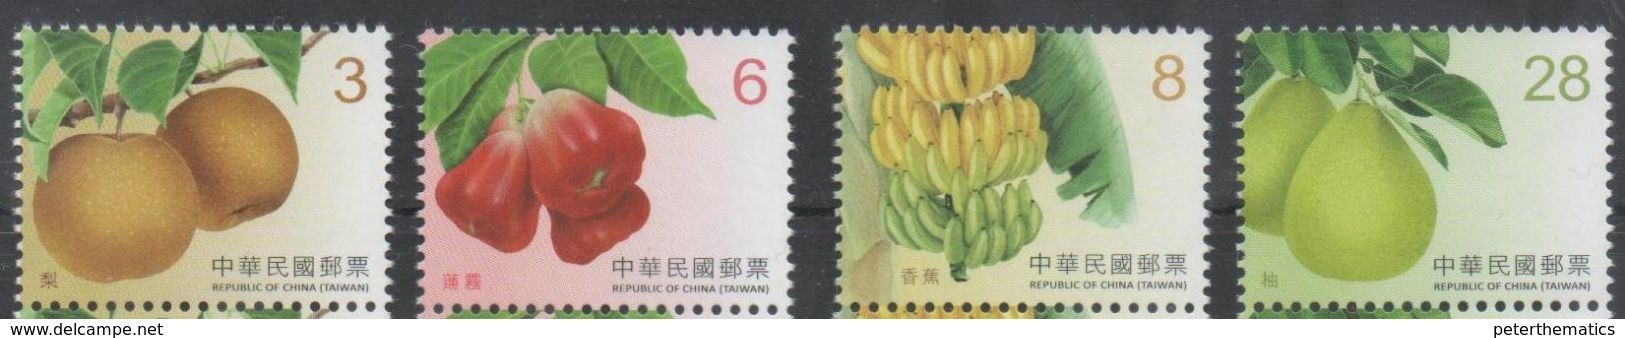 TAIWAN, 2017, MNH, FRUIT , PART II, BANANAS, PEARS, APPLES, 4v - Fruits